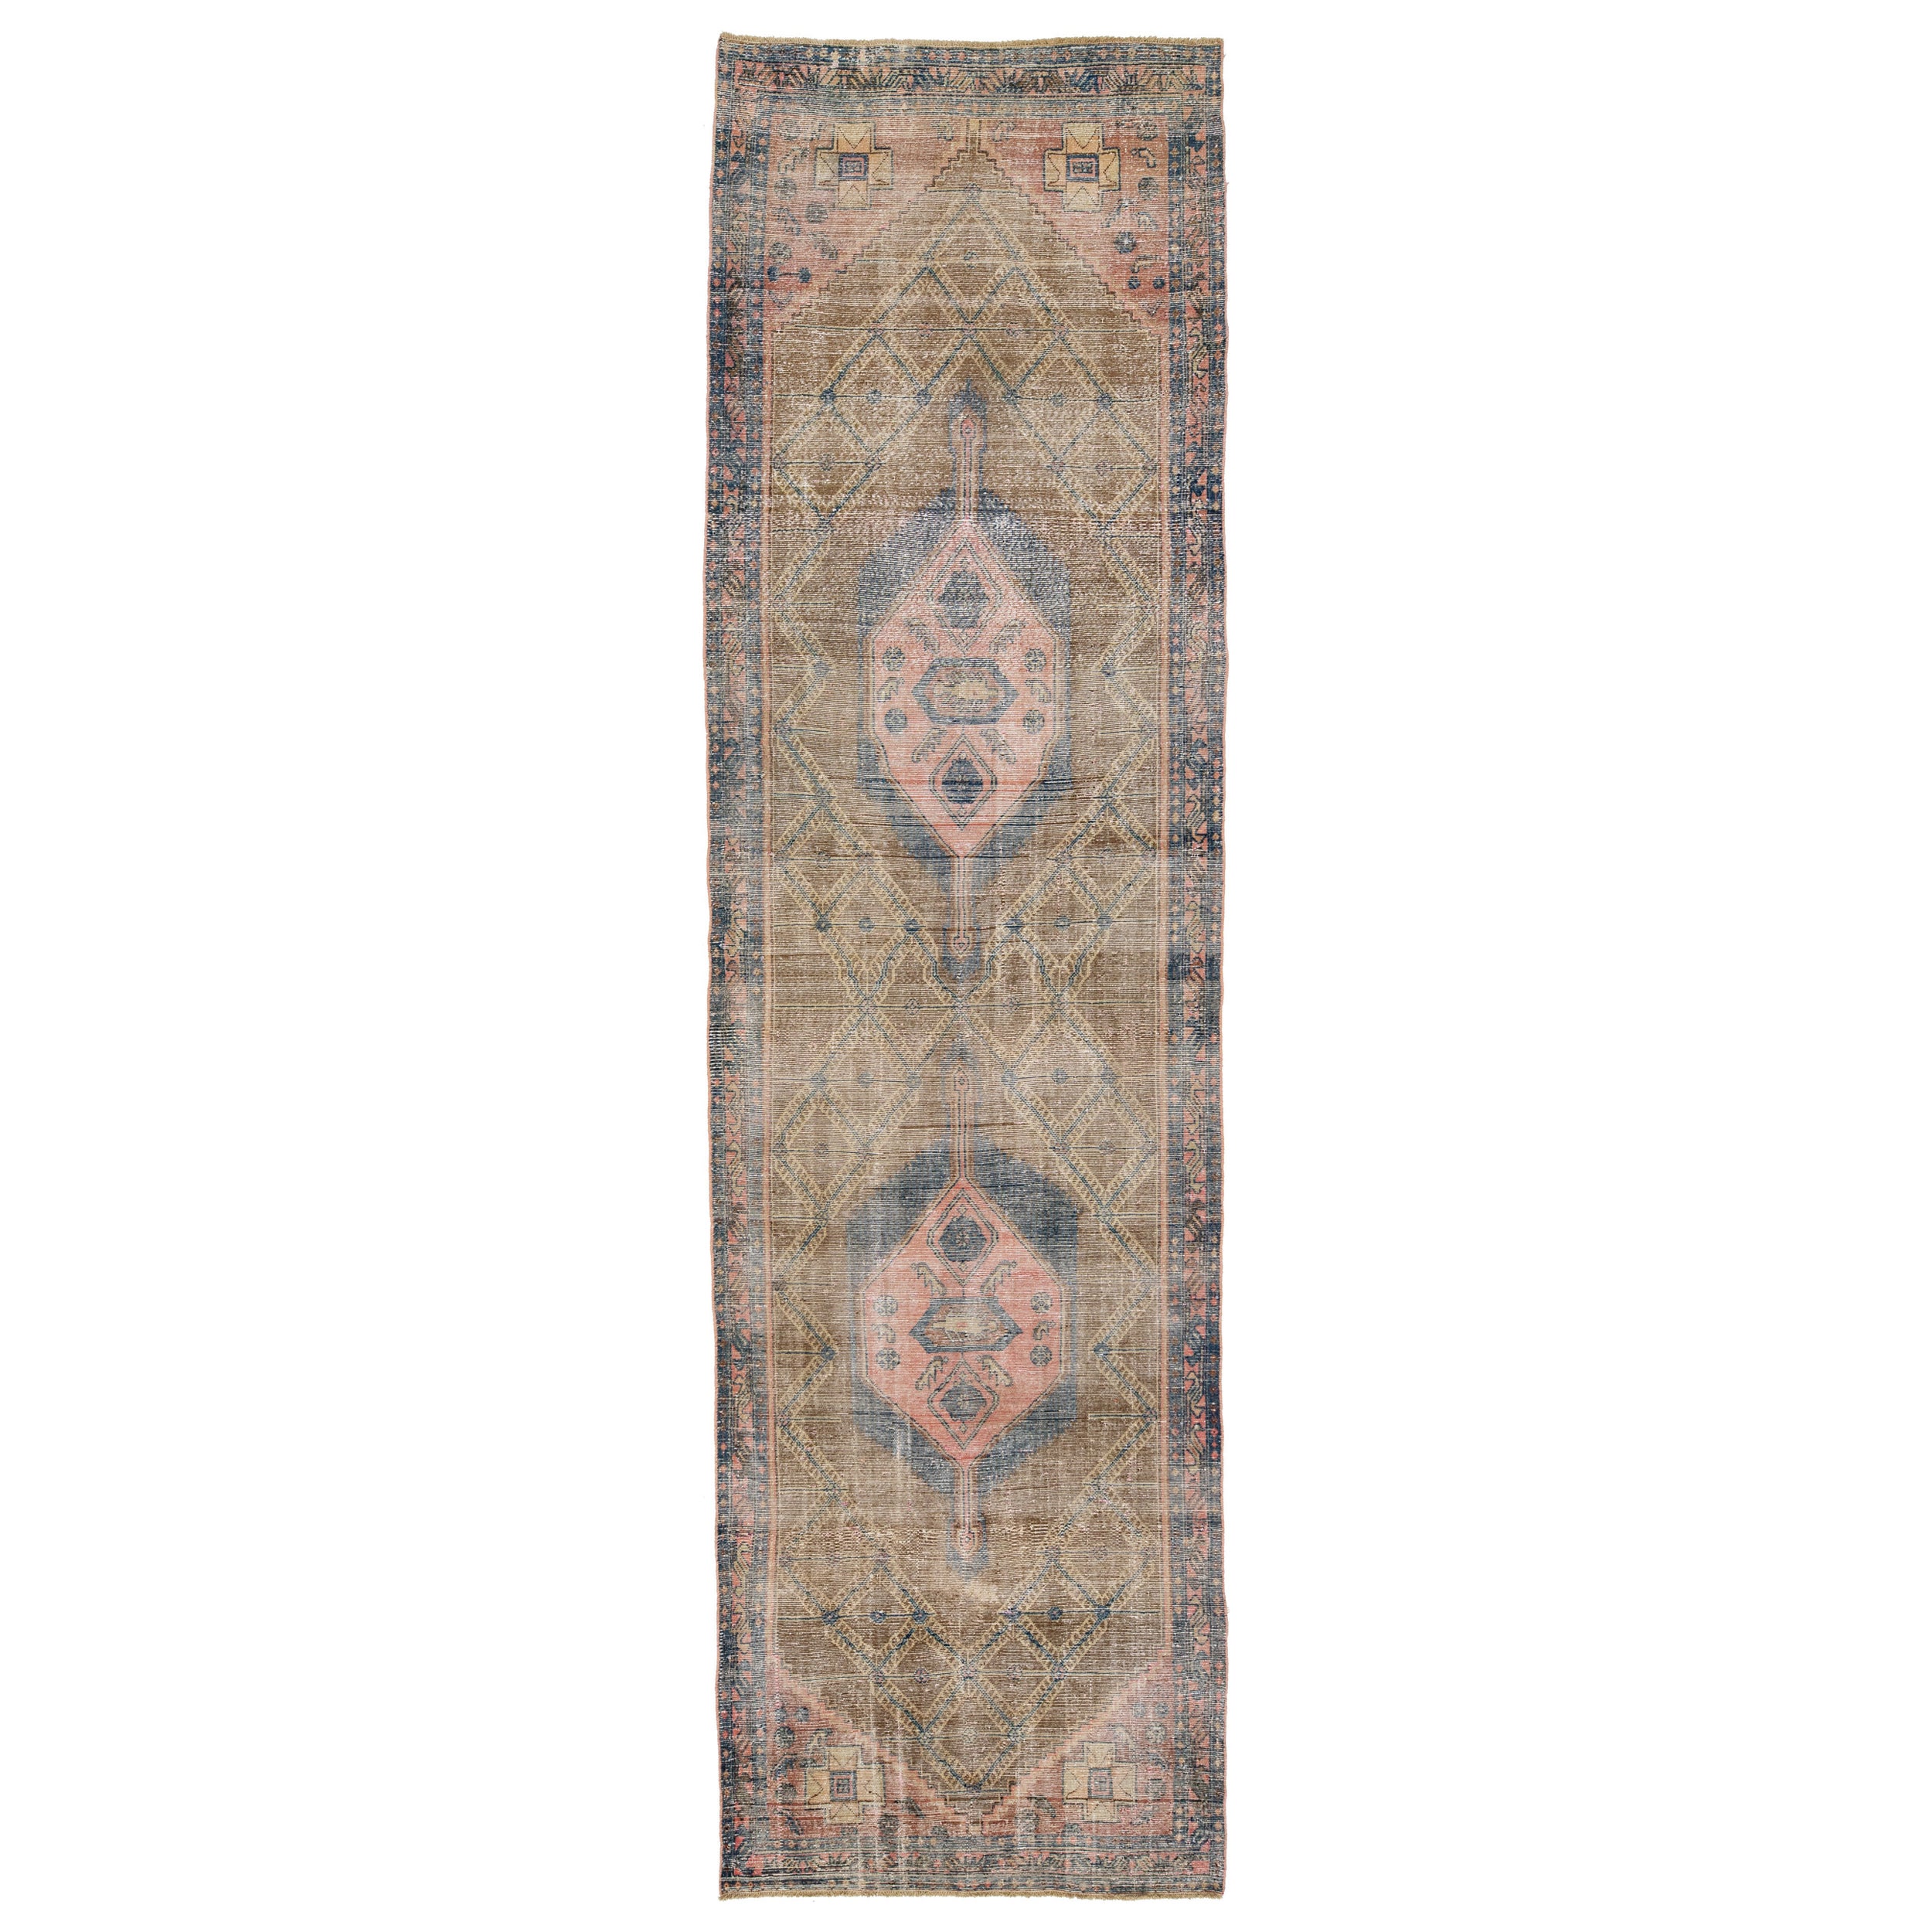 4 x 15 Vintage Distressed Persian Wool Runner In Brown mit Tribal-Motiv